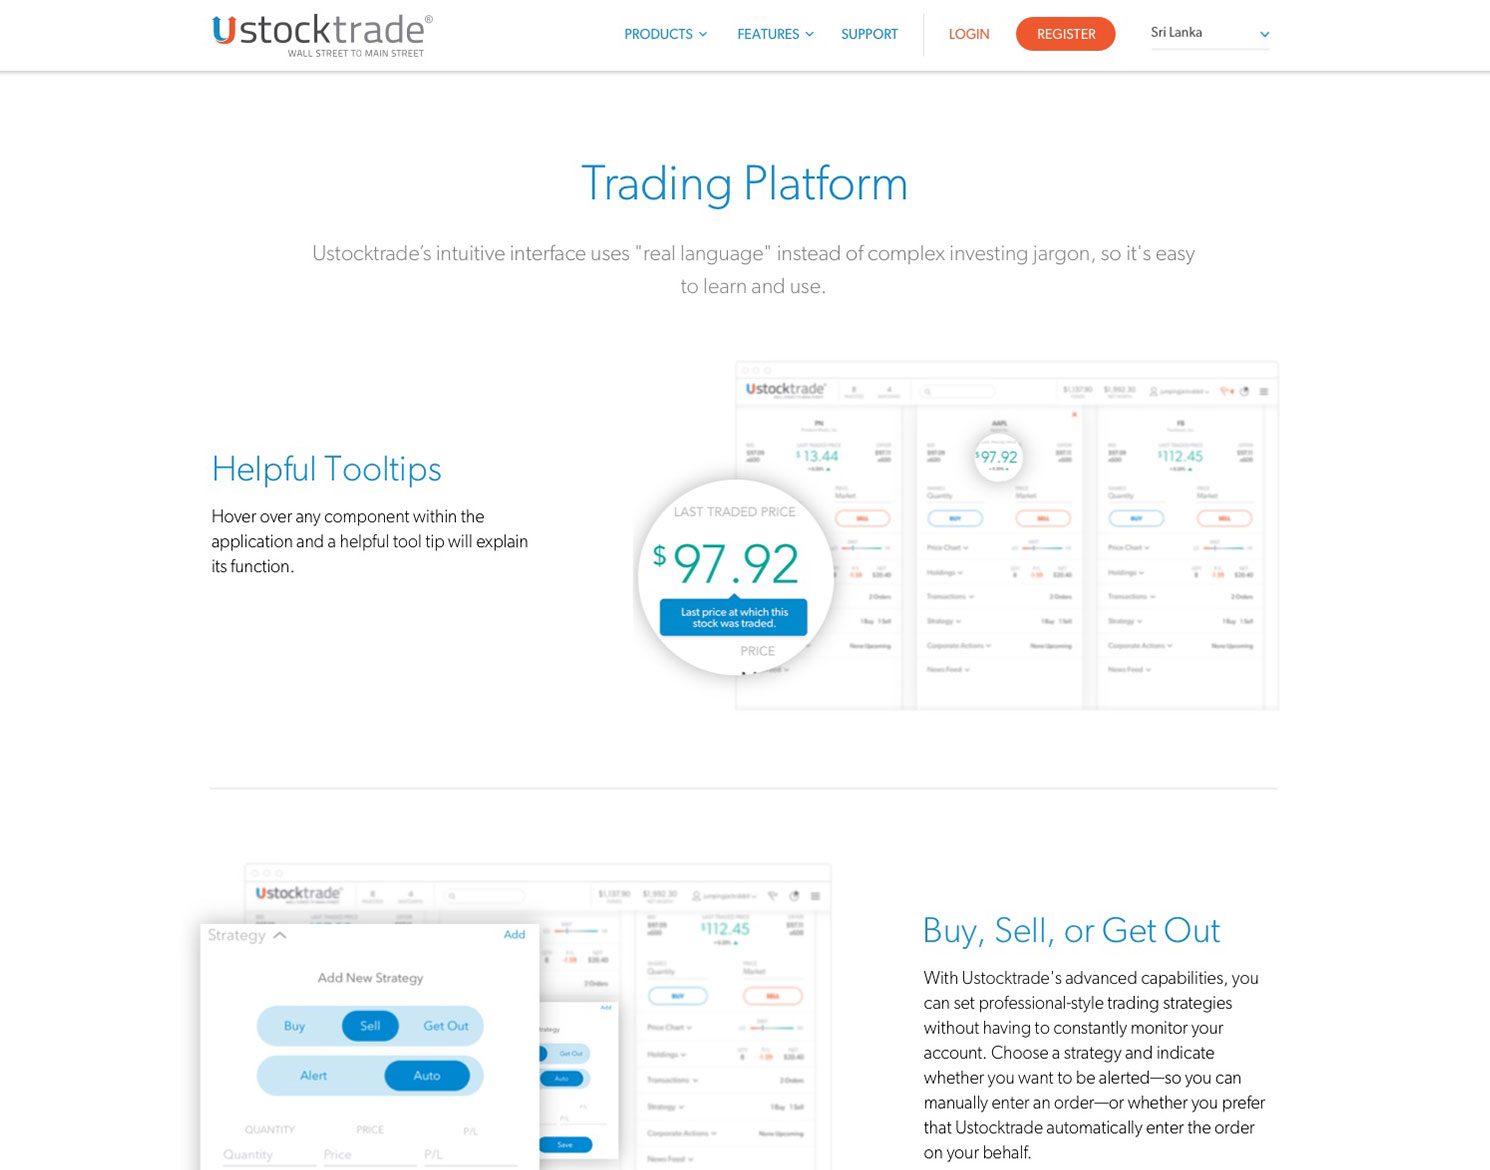 UST LK Website - Trading Platform